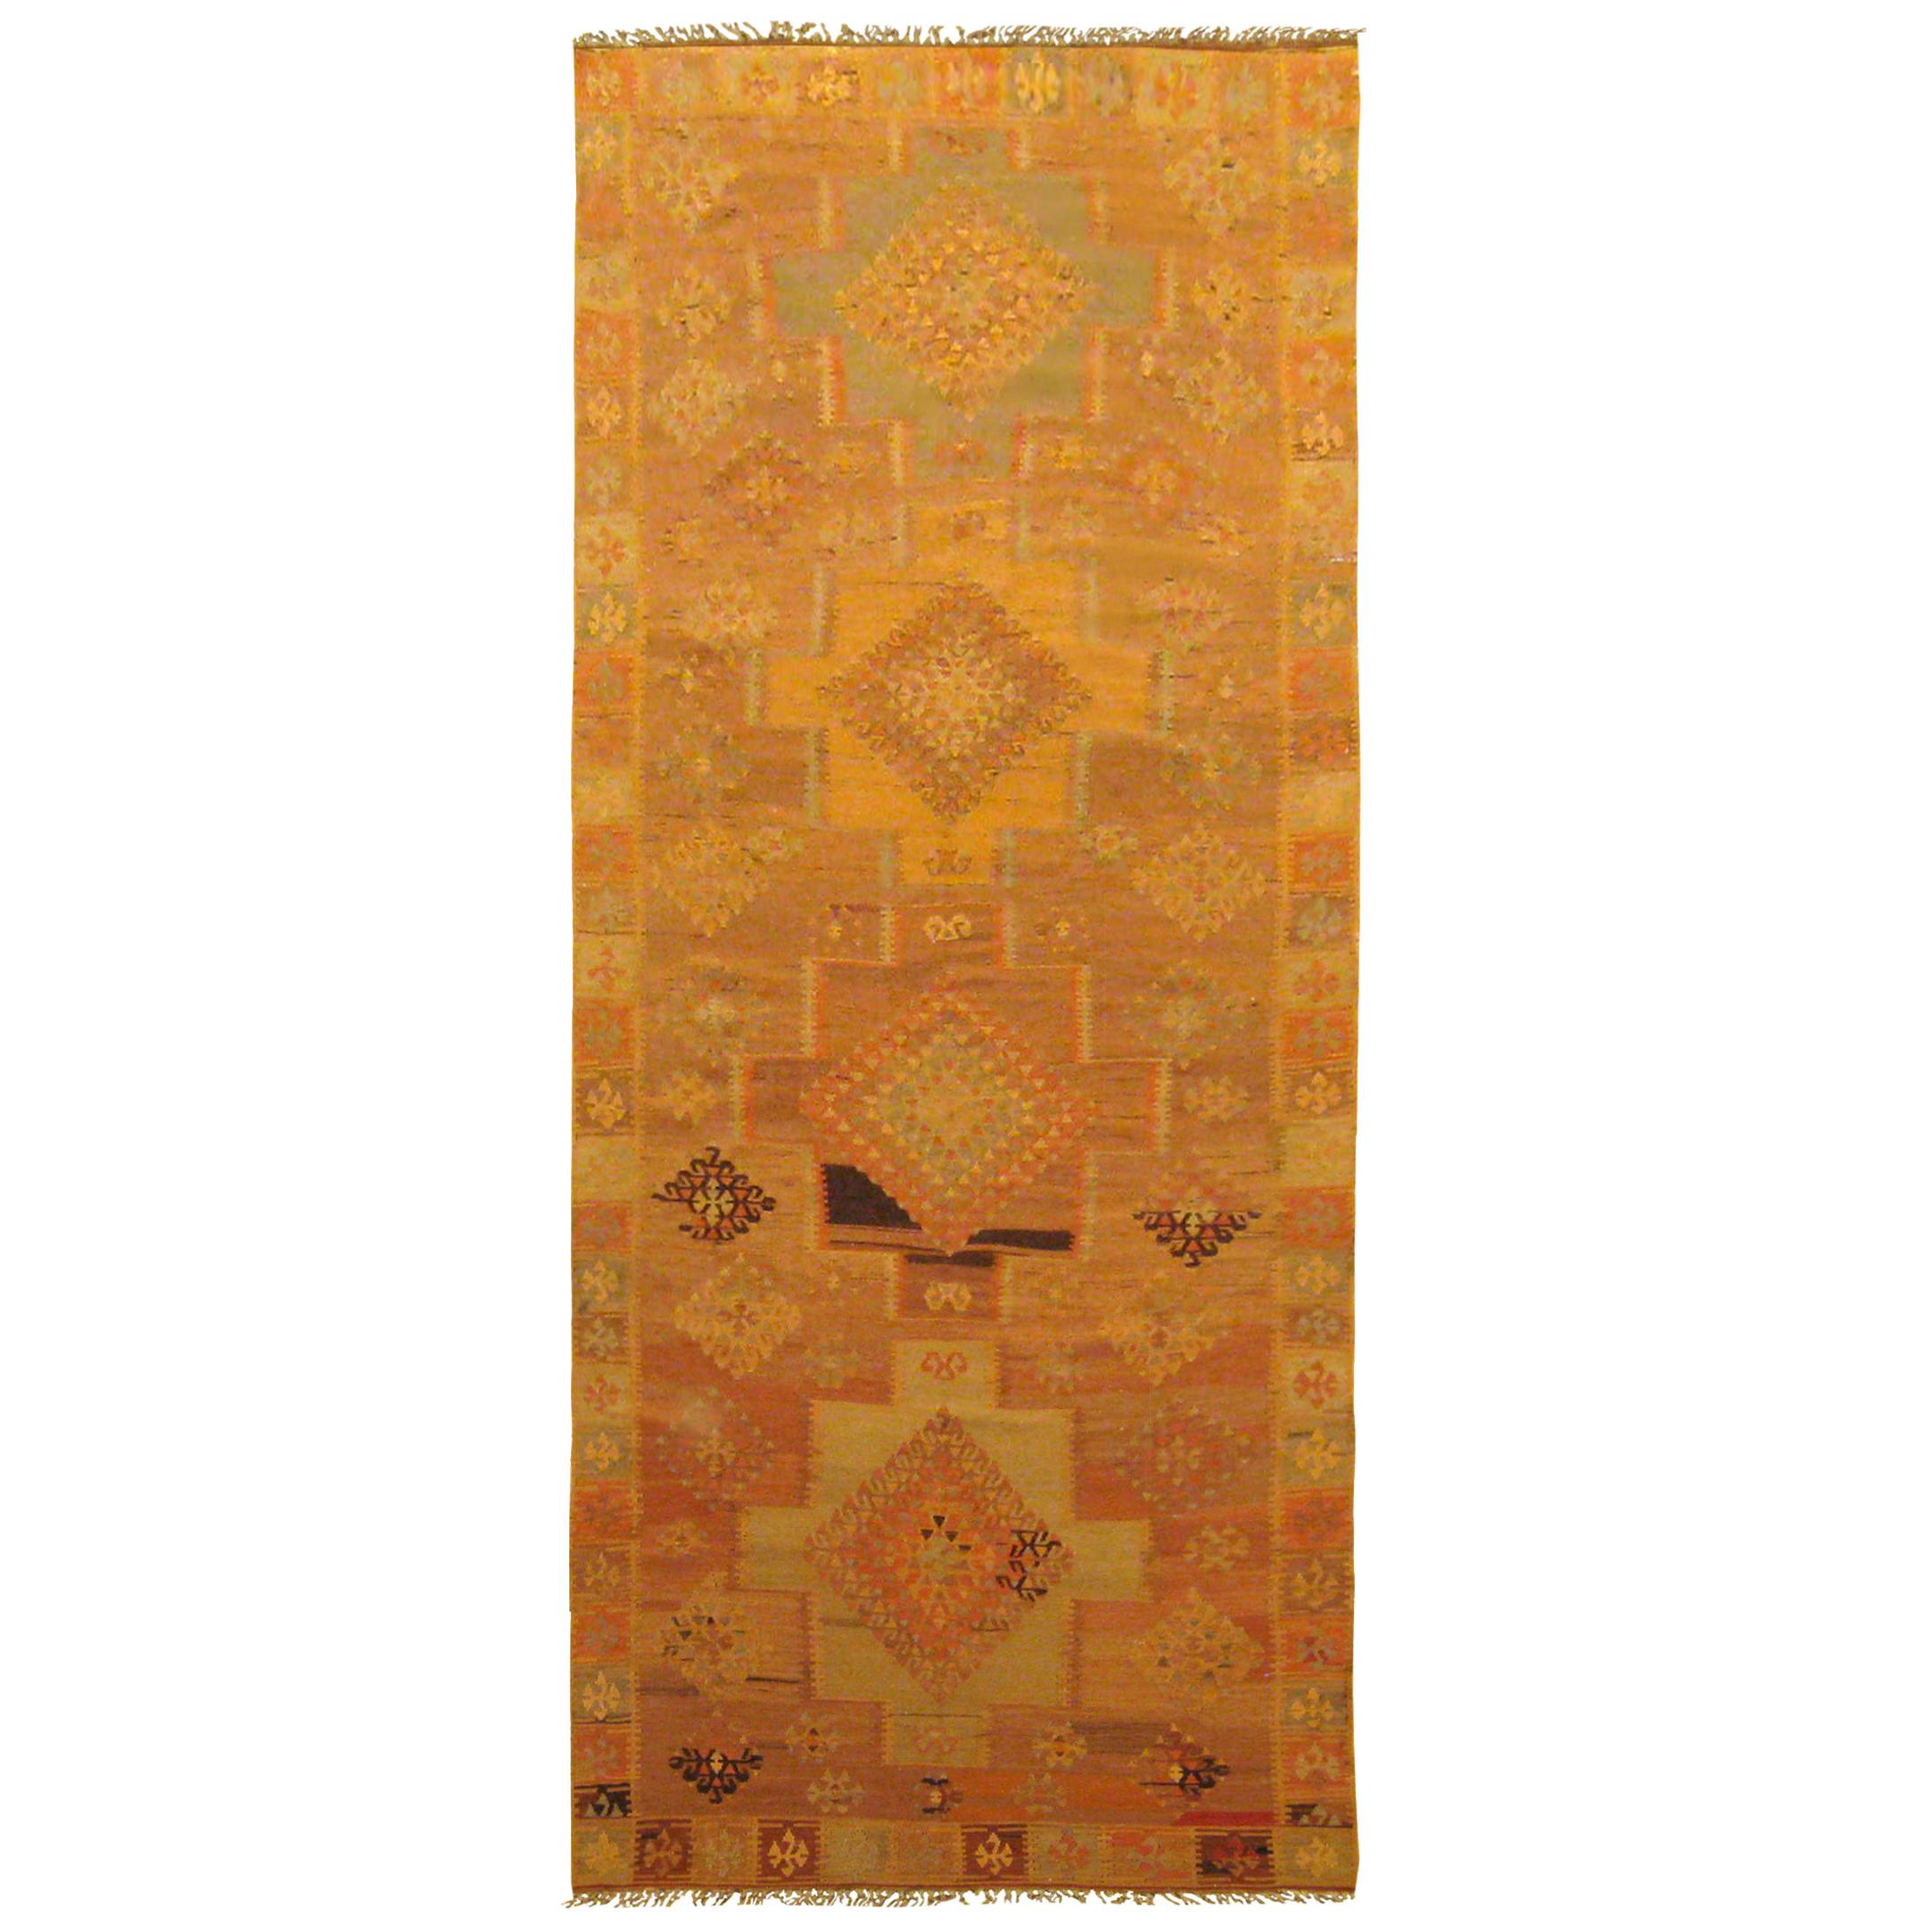 Vintage Turkish Kilim Oriental Rug in Runner size, Geometric & Soft Earth Tones